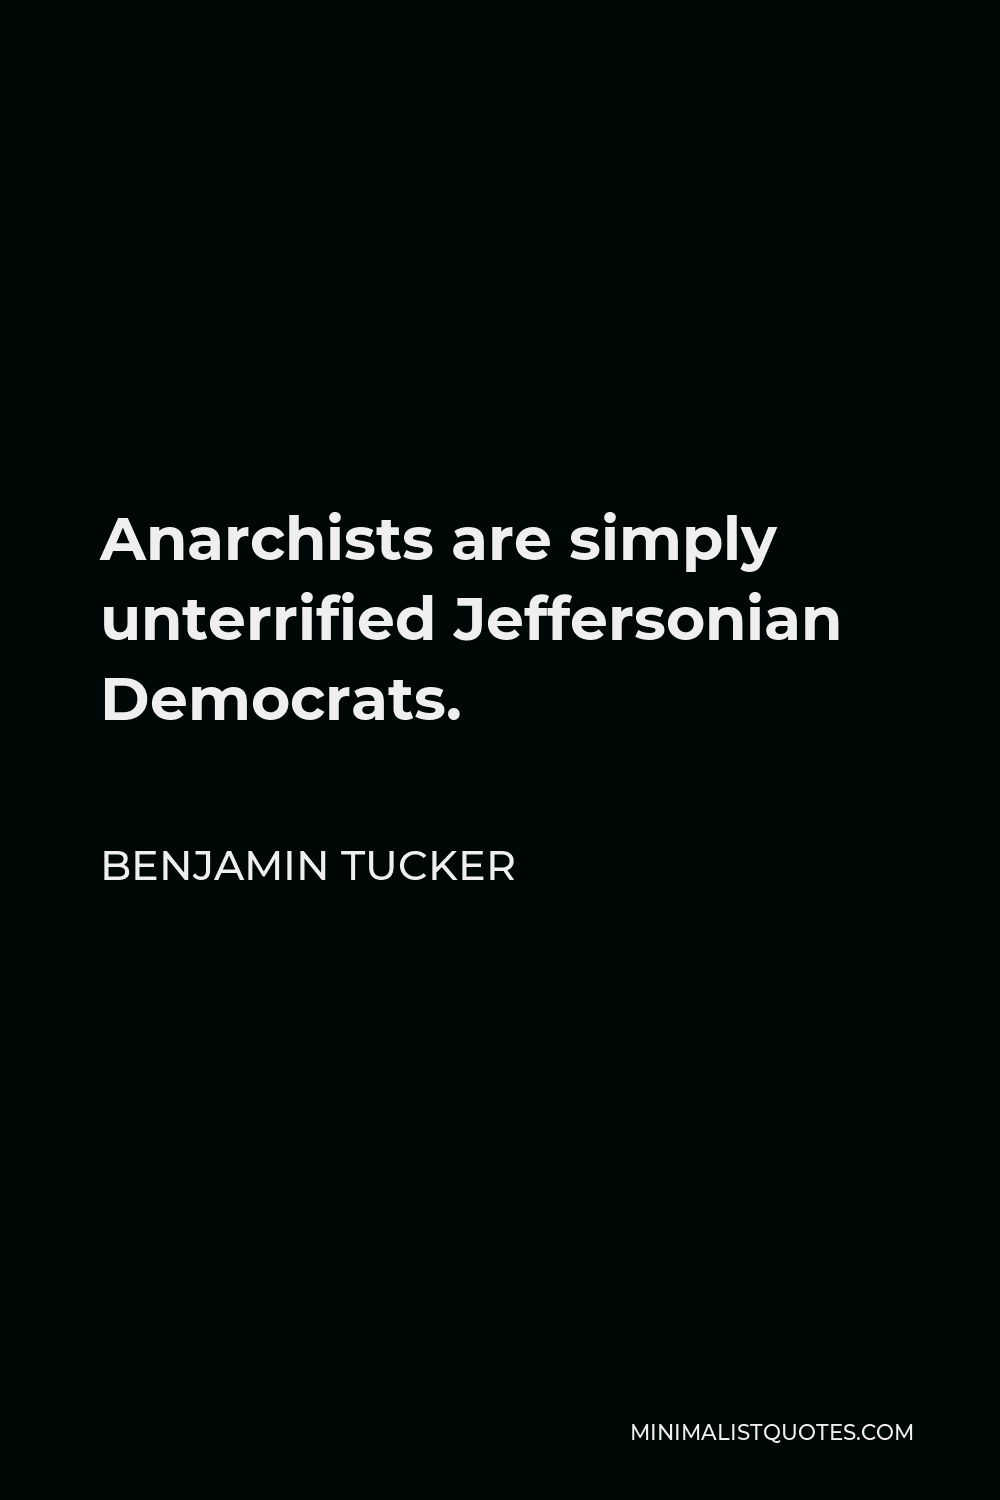 Benjamin Tucker Quote - Anarchists are simply unterrified Jeffersonian Democrats.